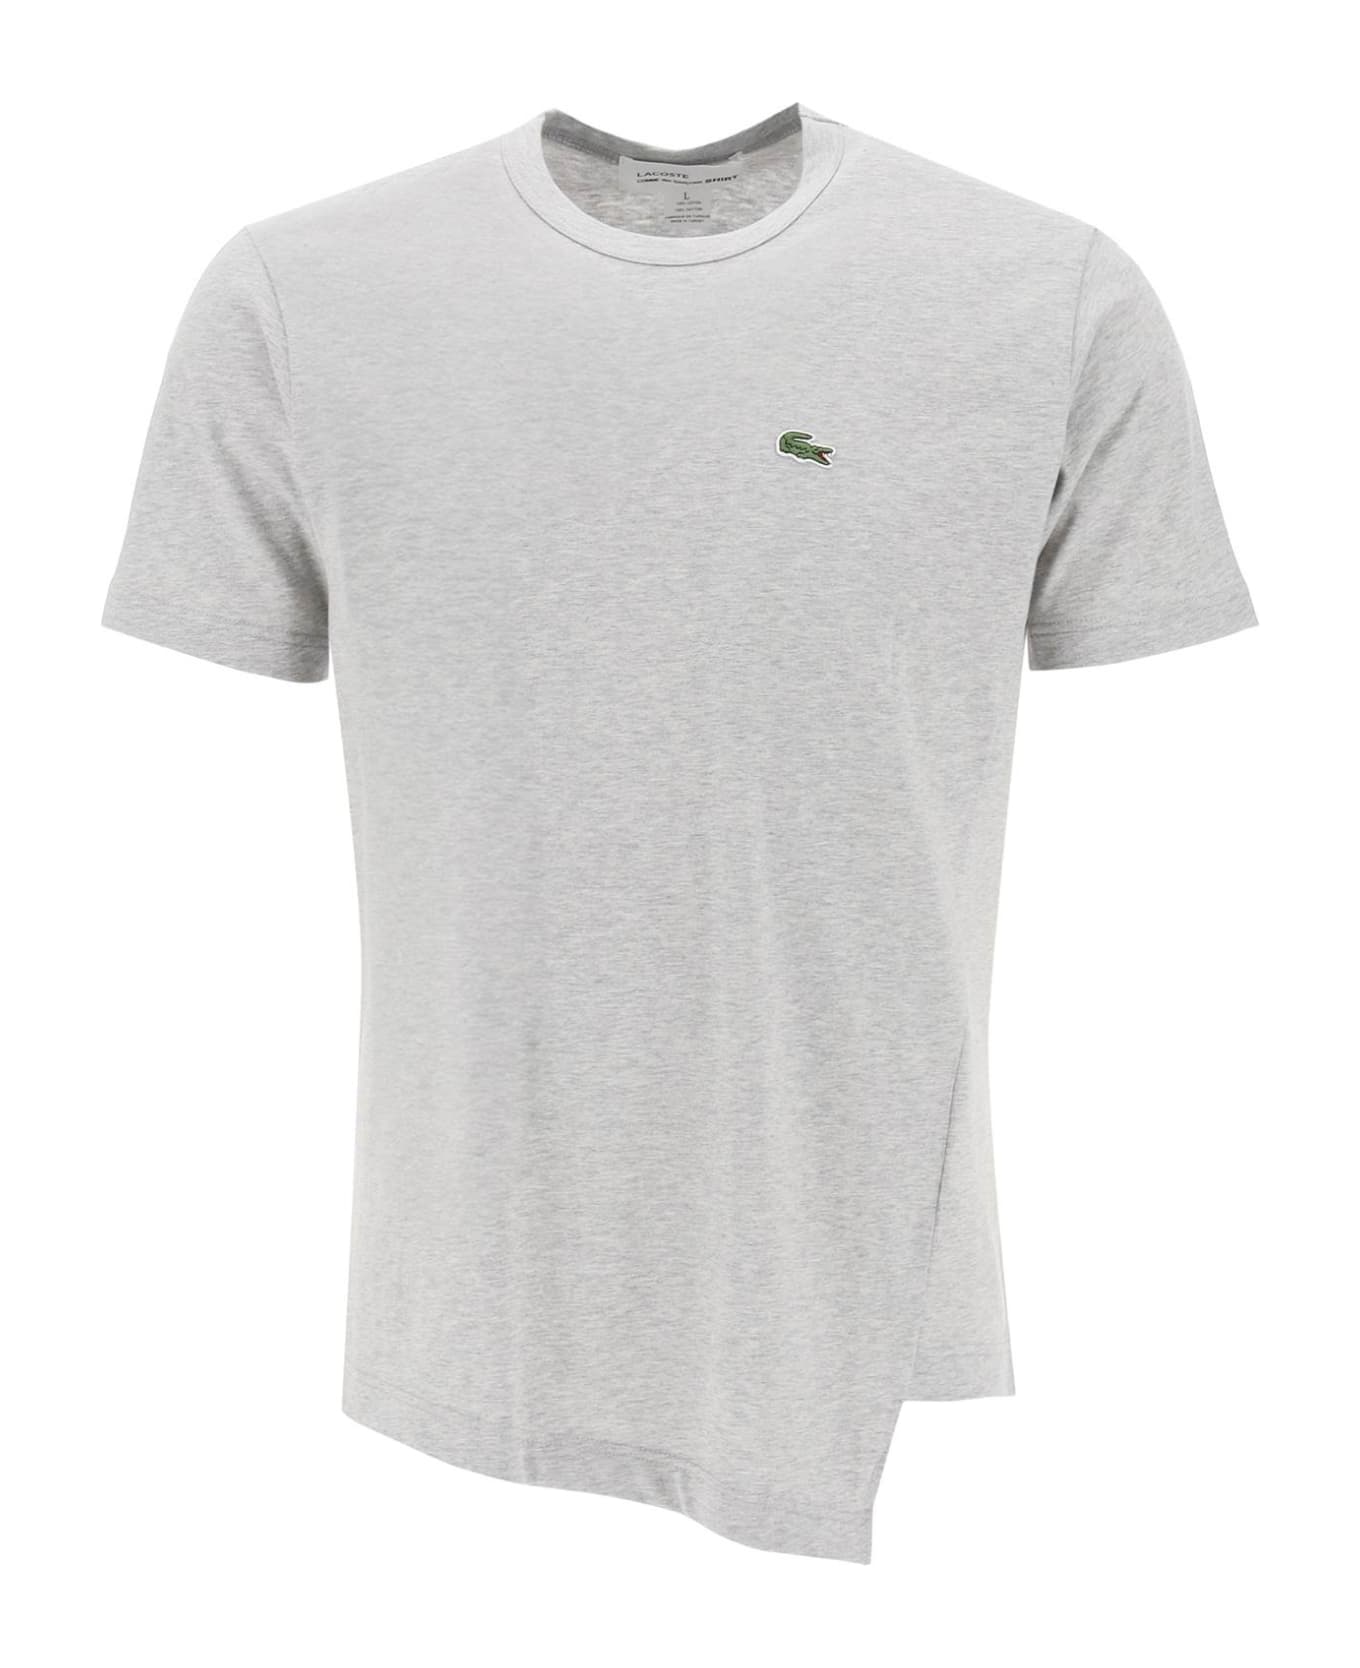 Comme des Garçons Shirt X Lacoste Asymmetrical T-shirt - TOP GREY (Grey)